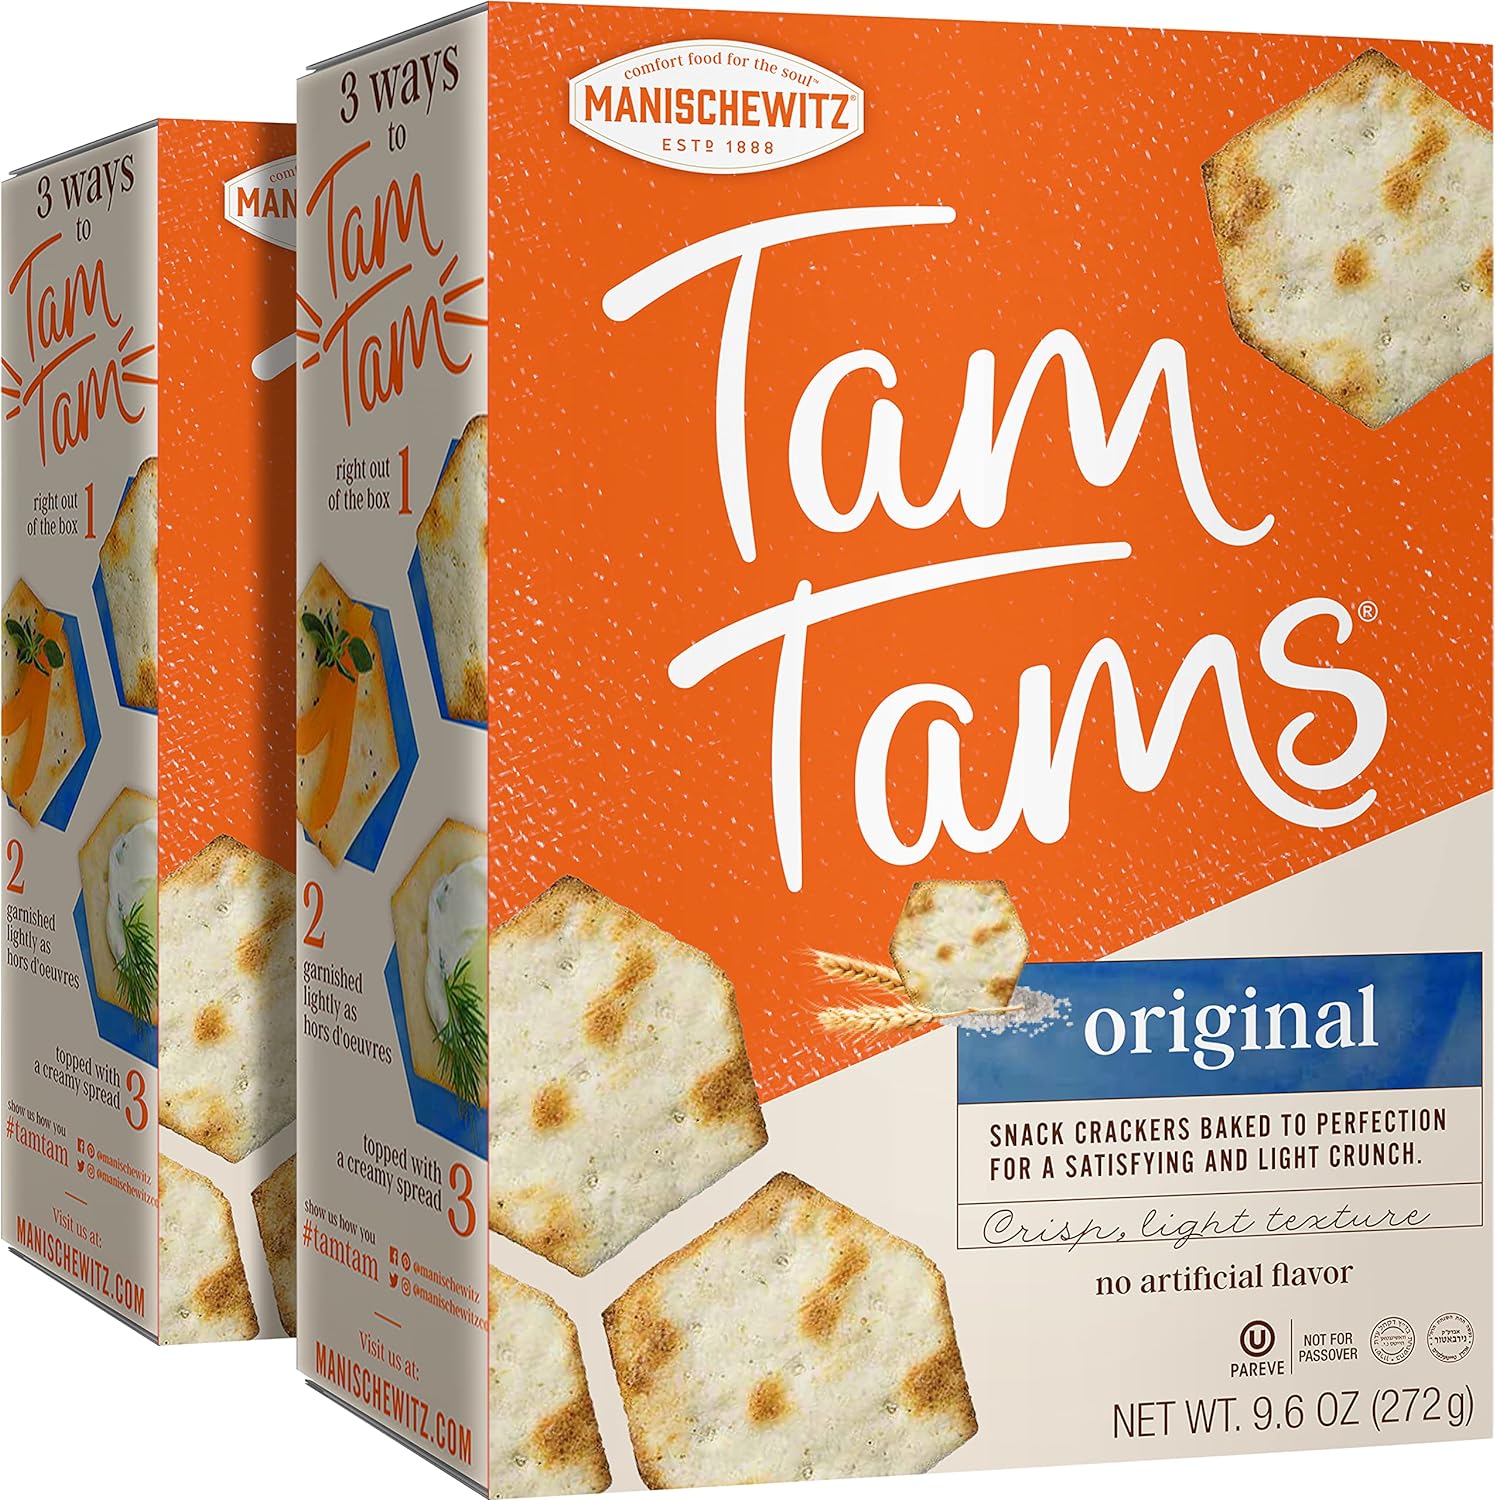 Manischewitz Tam Tam Original Crackers 9.6oz (2 Pack), Fluffy & Airy, Baked to Perfection